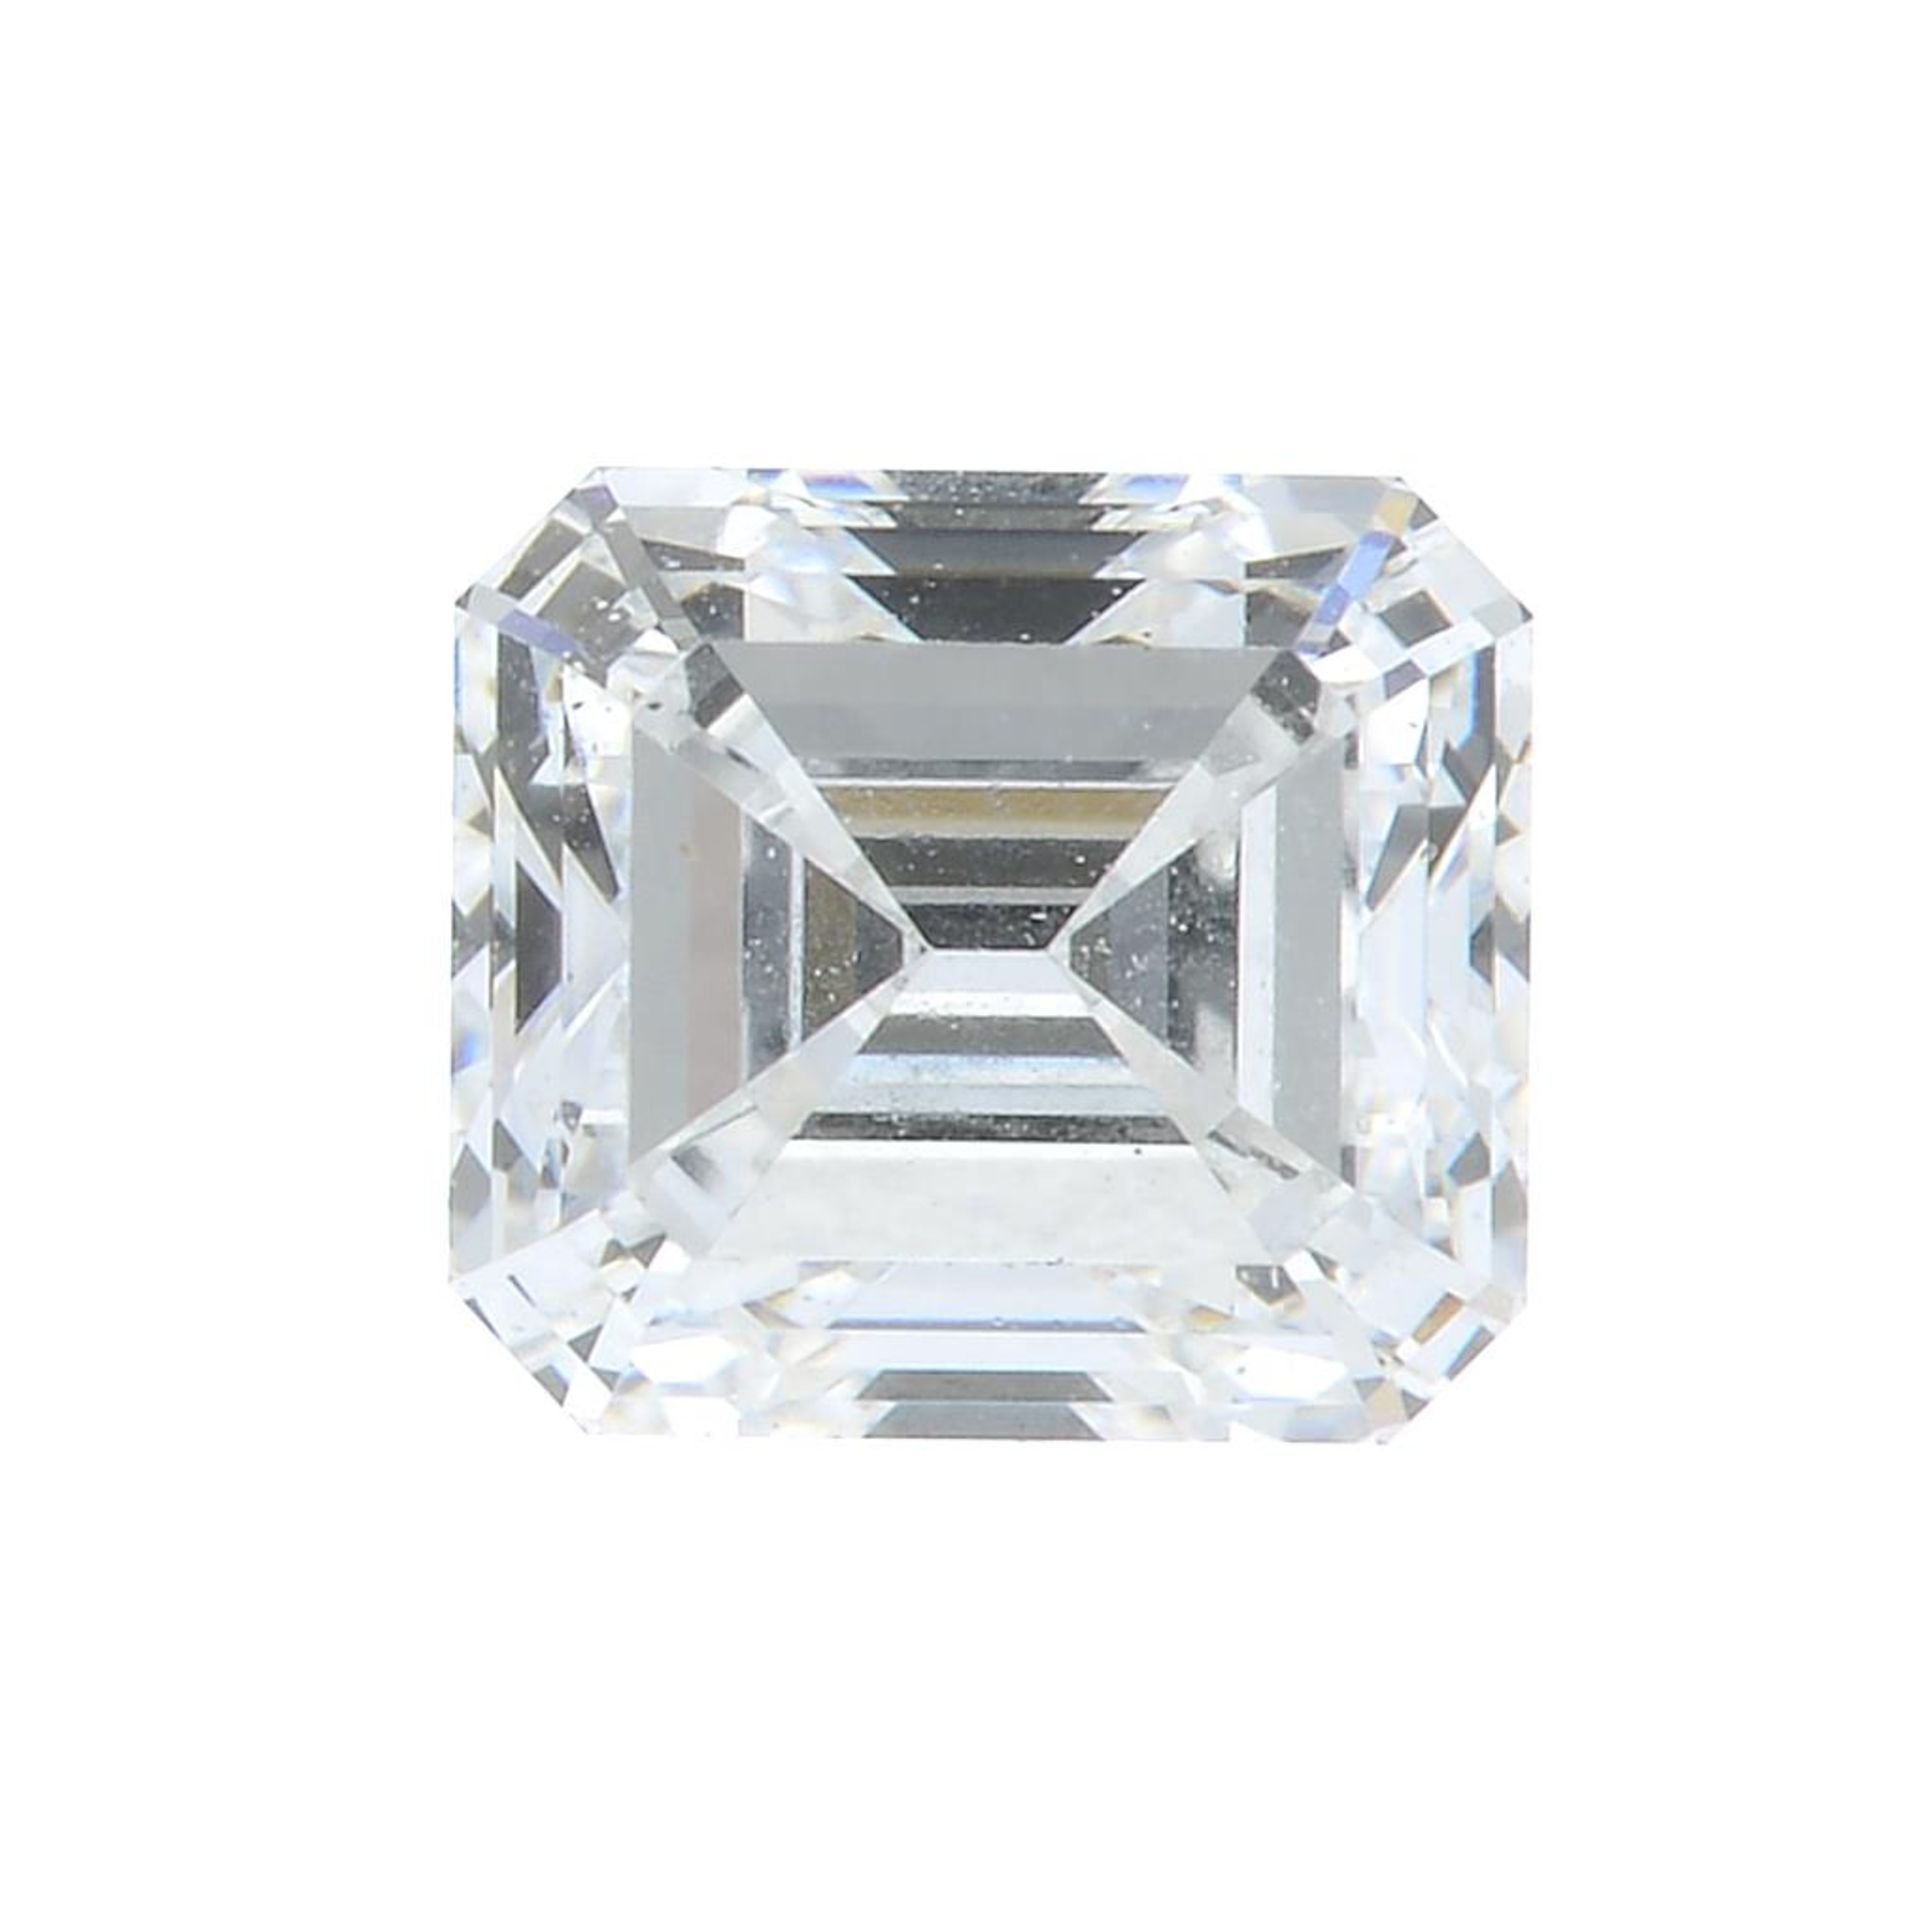 A square-shape diamond.